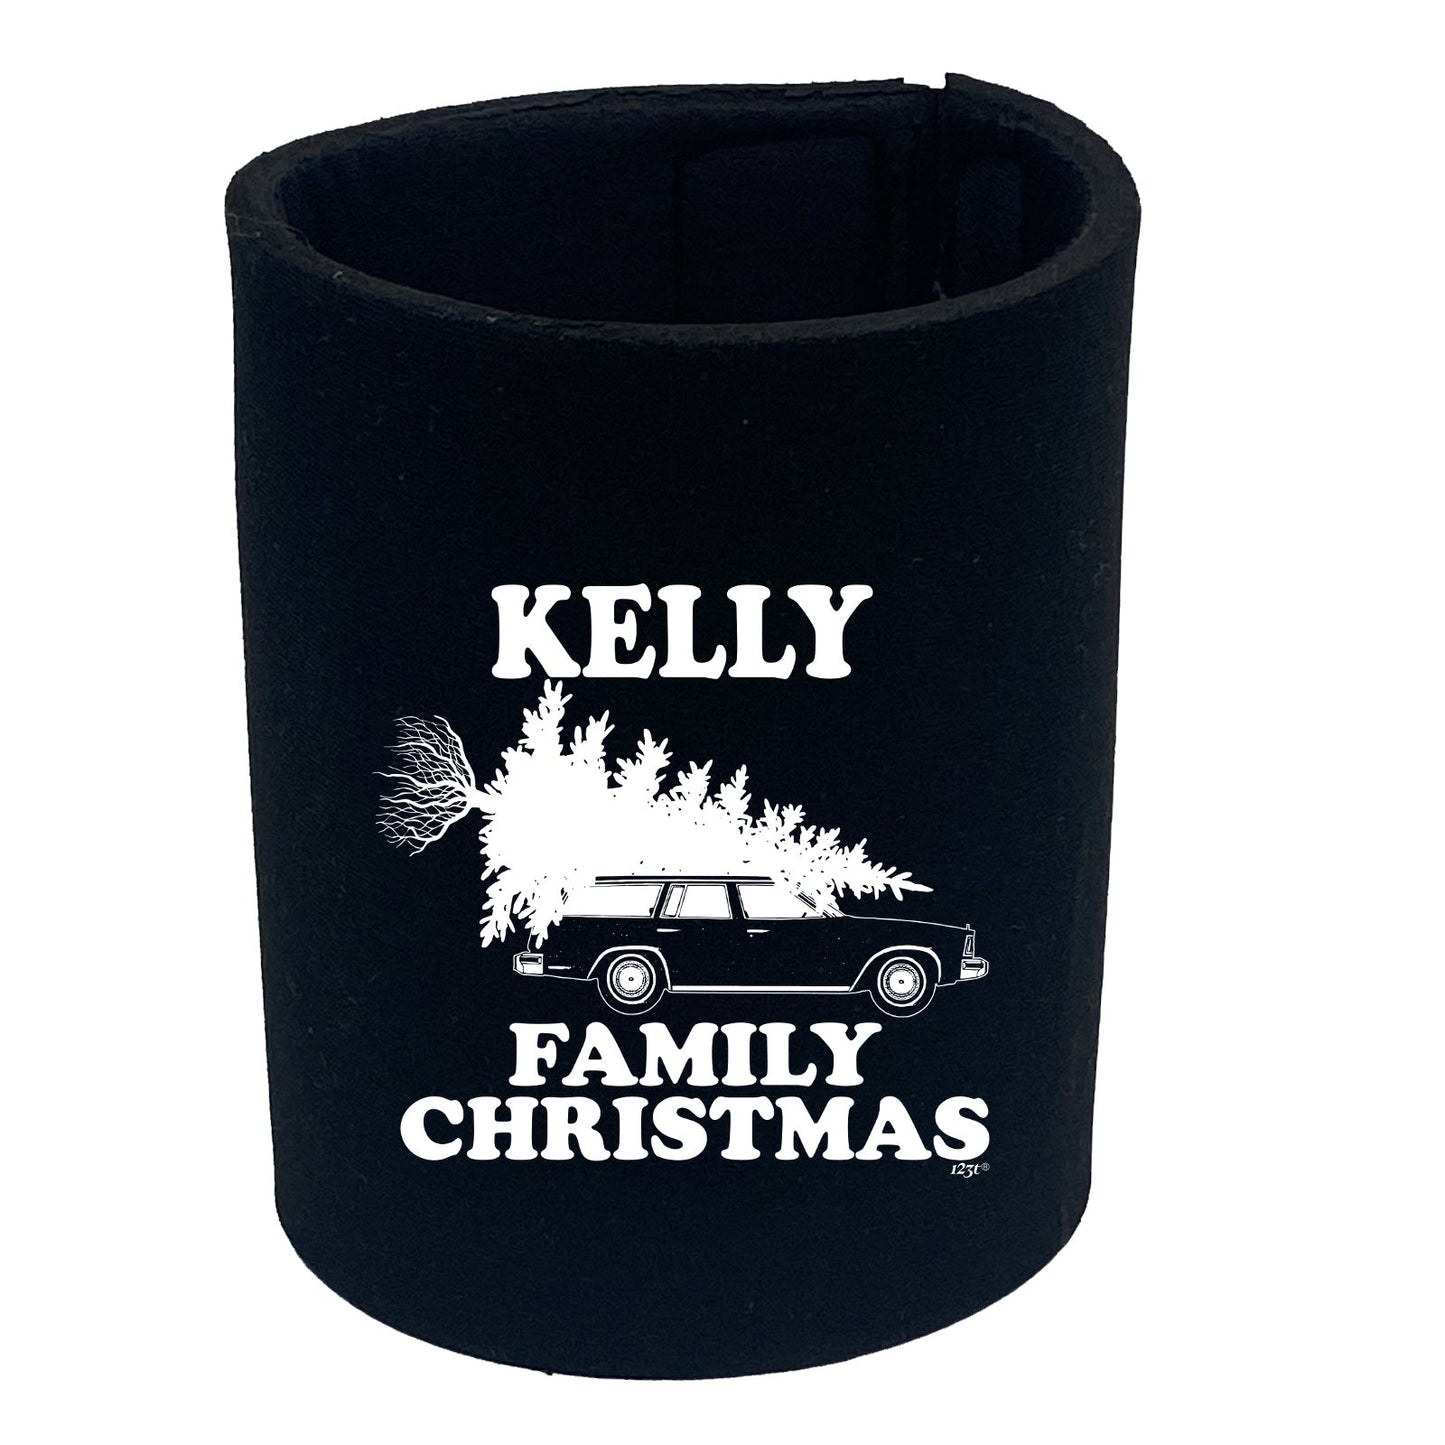 Family Christmas Kelly - Funny Stubby Holder